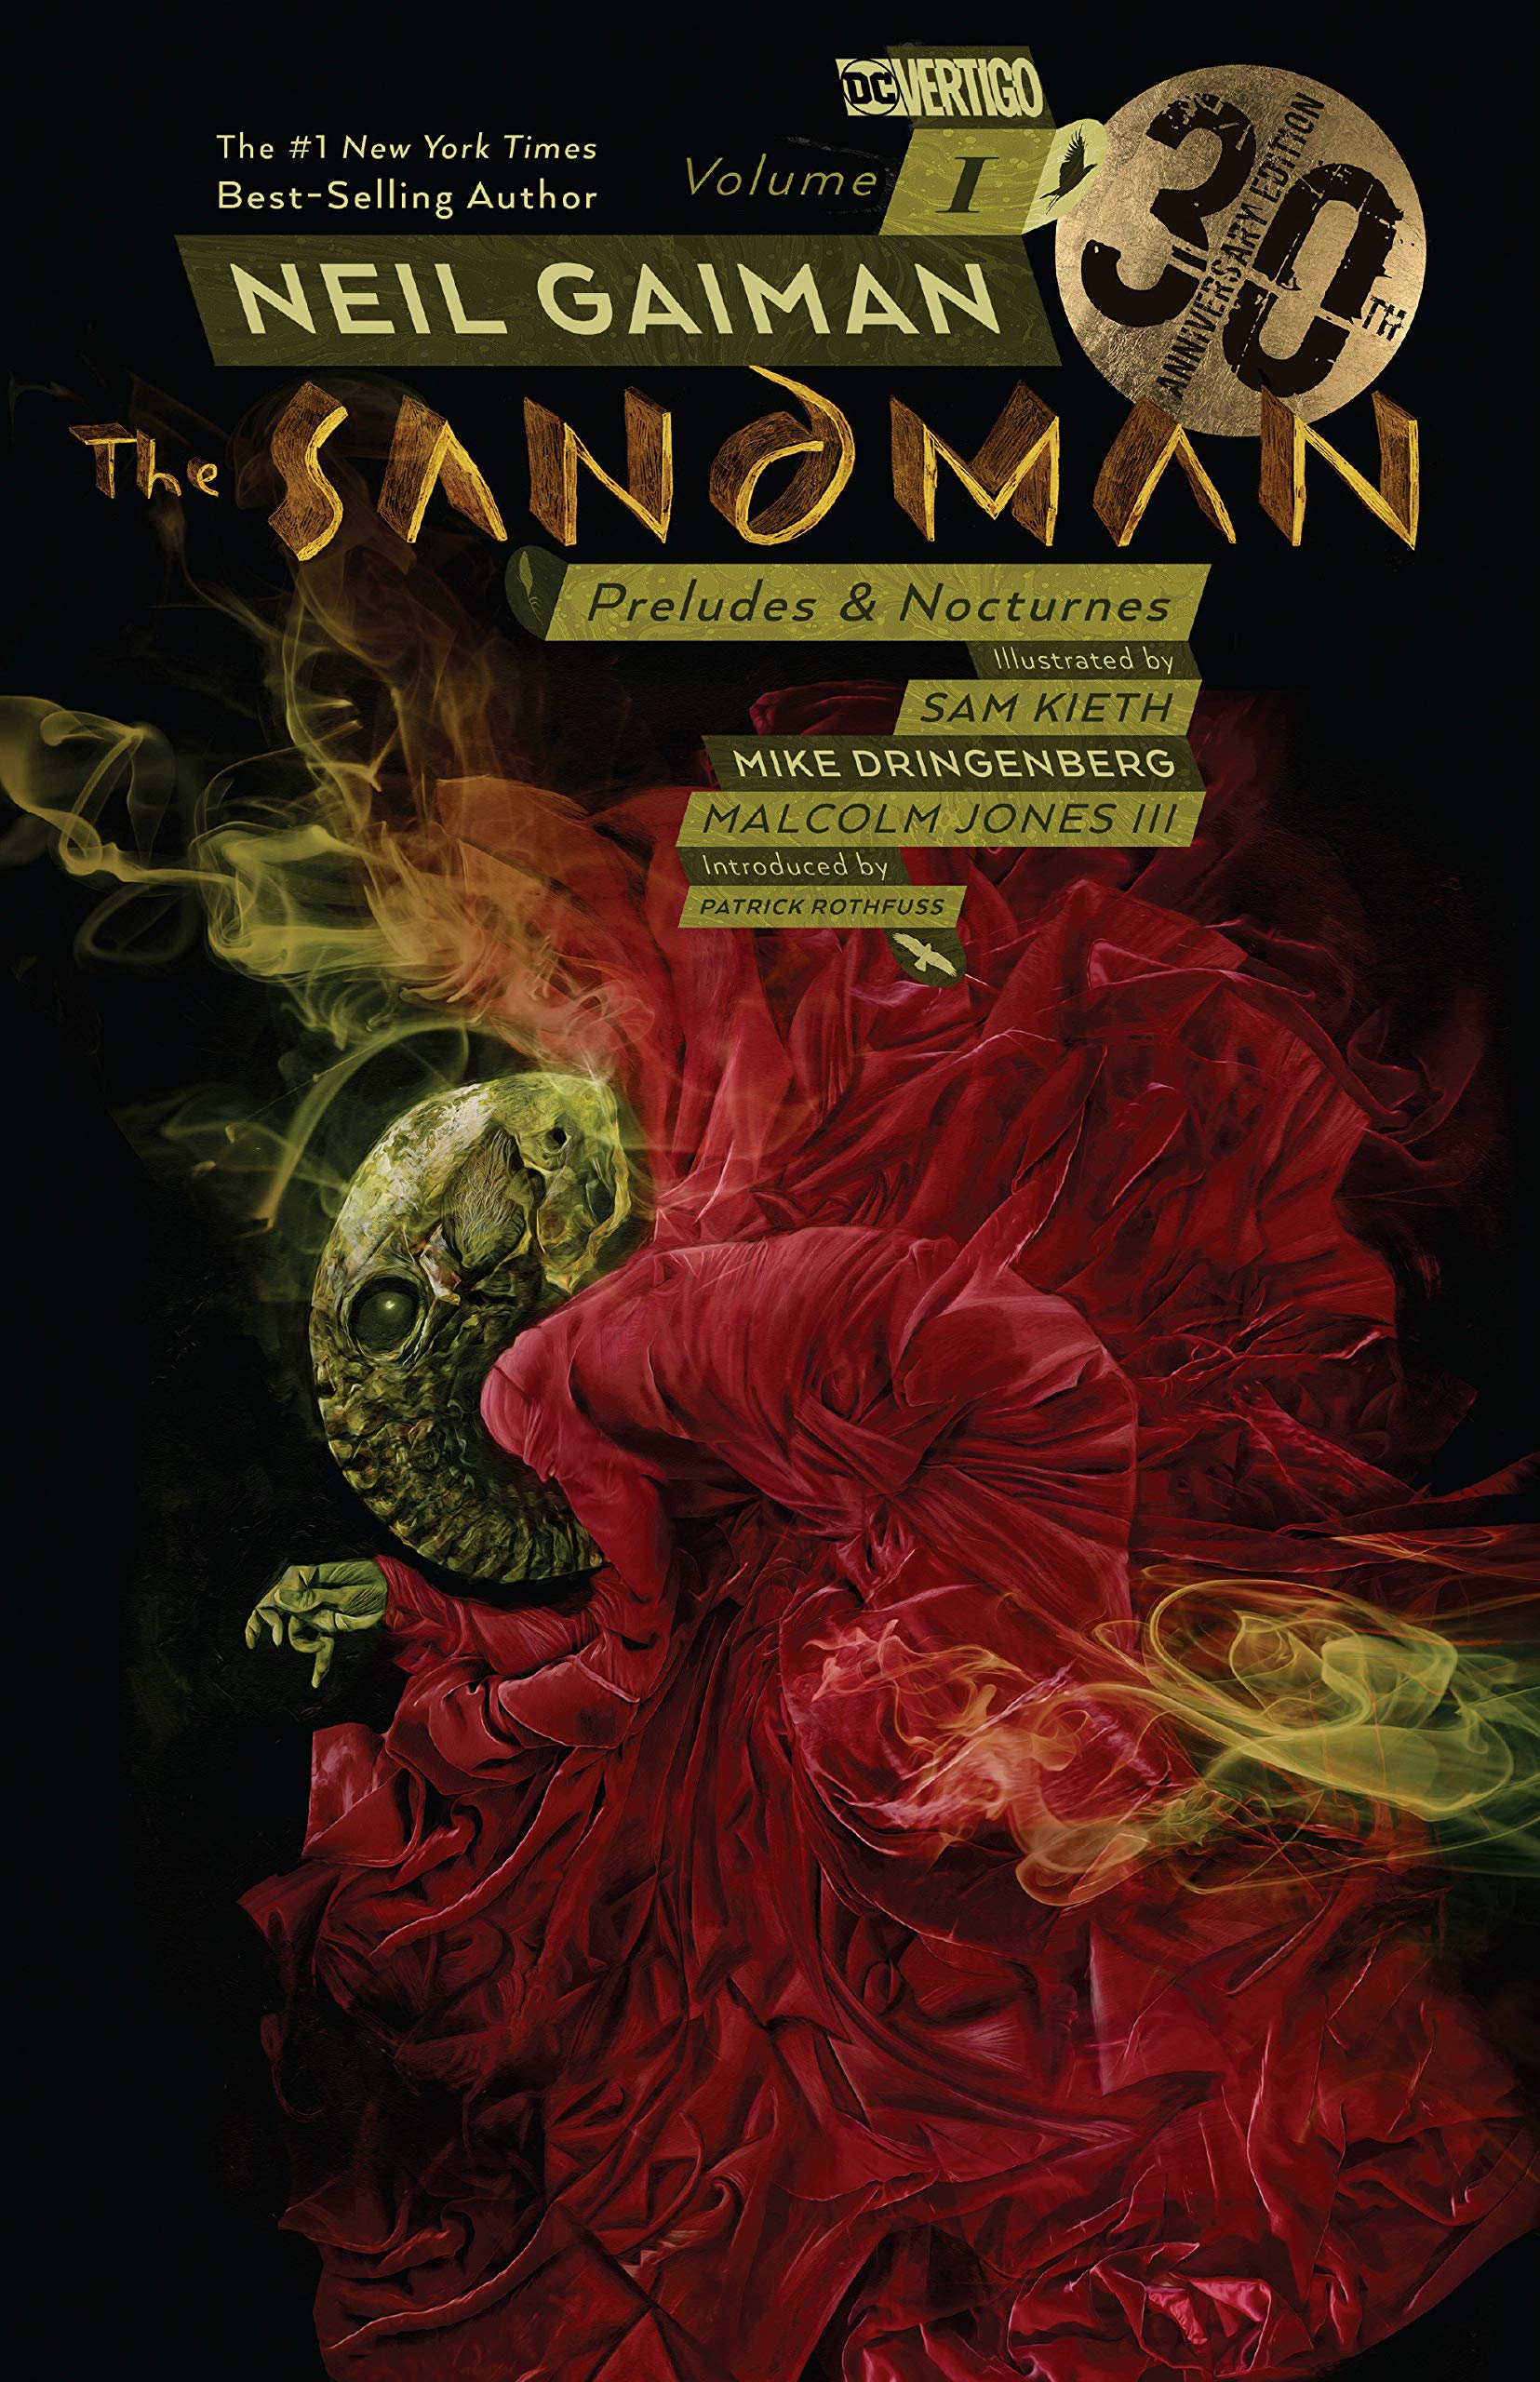 Image for "The Sandman Volume 1"